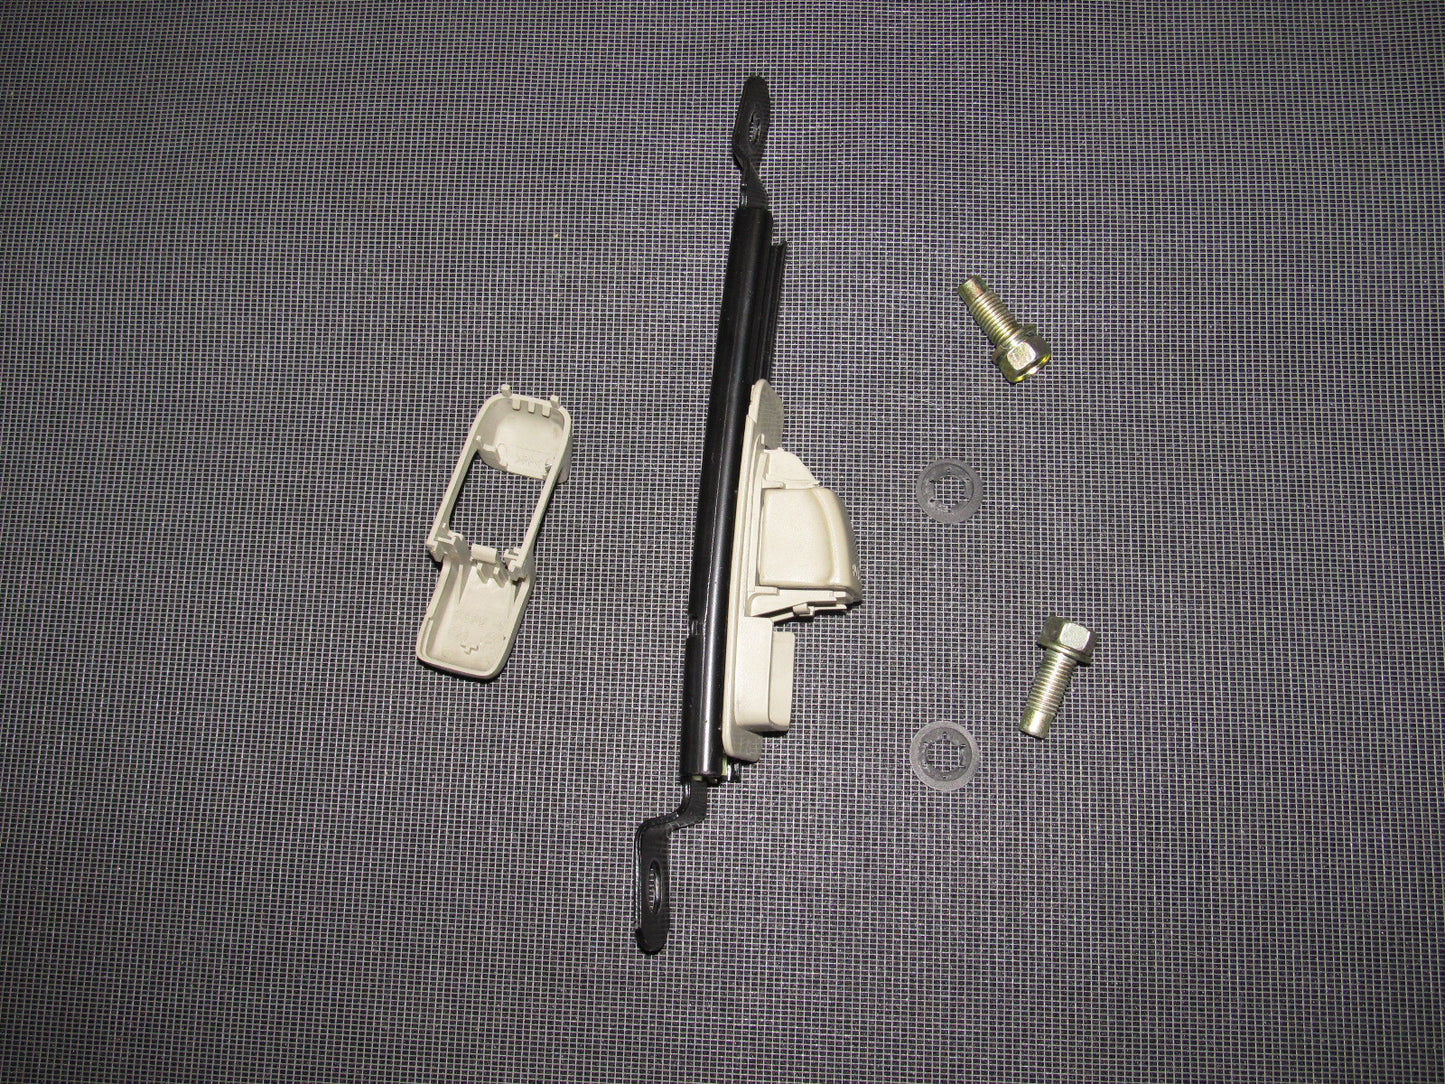 03 04 Infiniti G35 OEM Sedan Seat Belt Adjustment Switch - Front Left